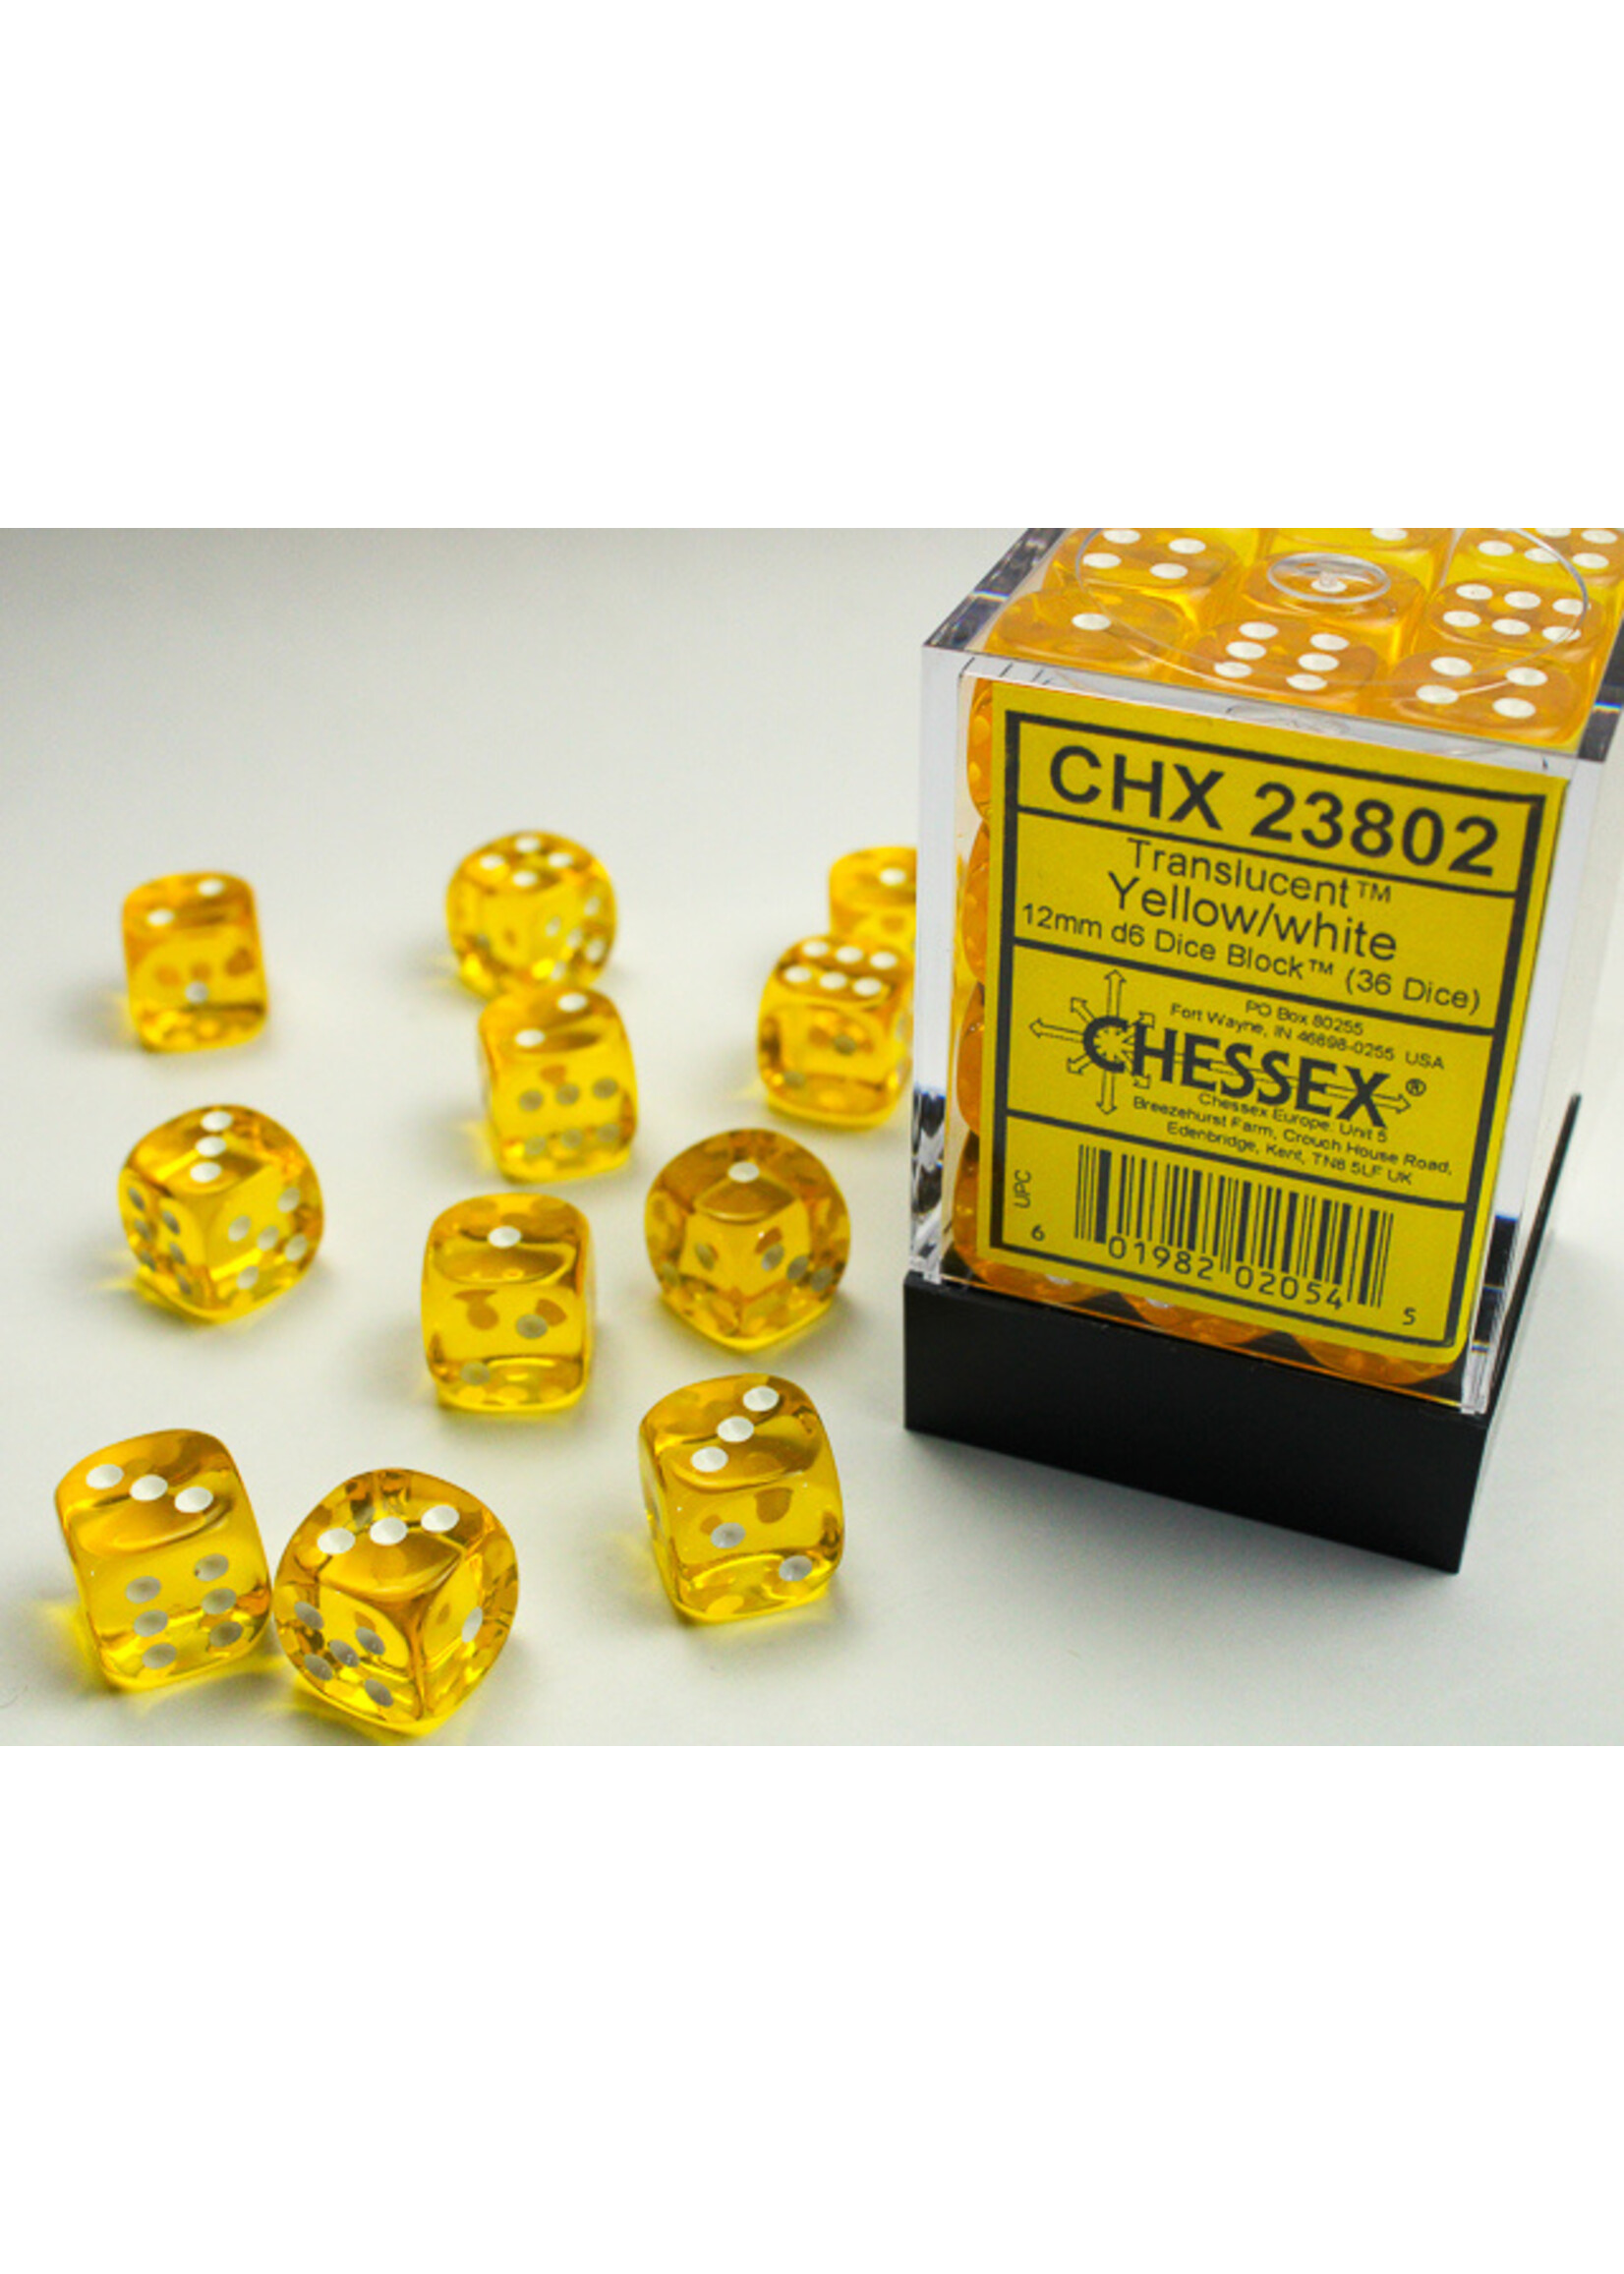 Chessex TRAN 36d6 yellow/white